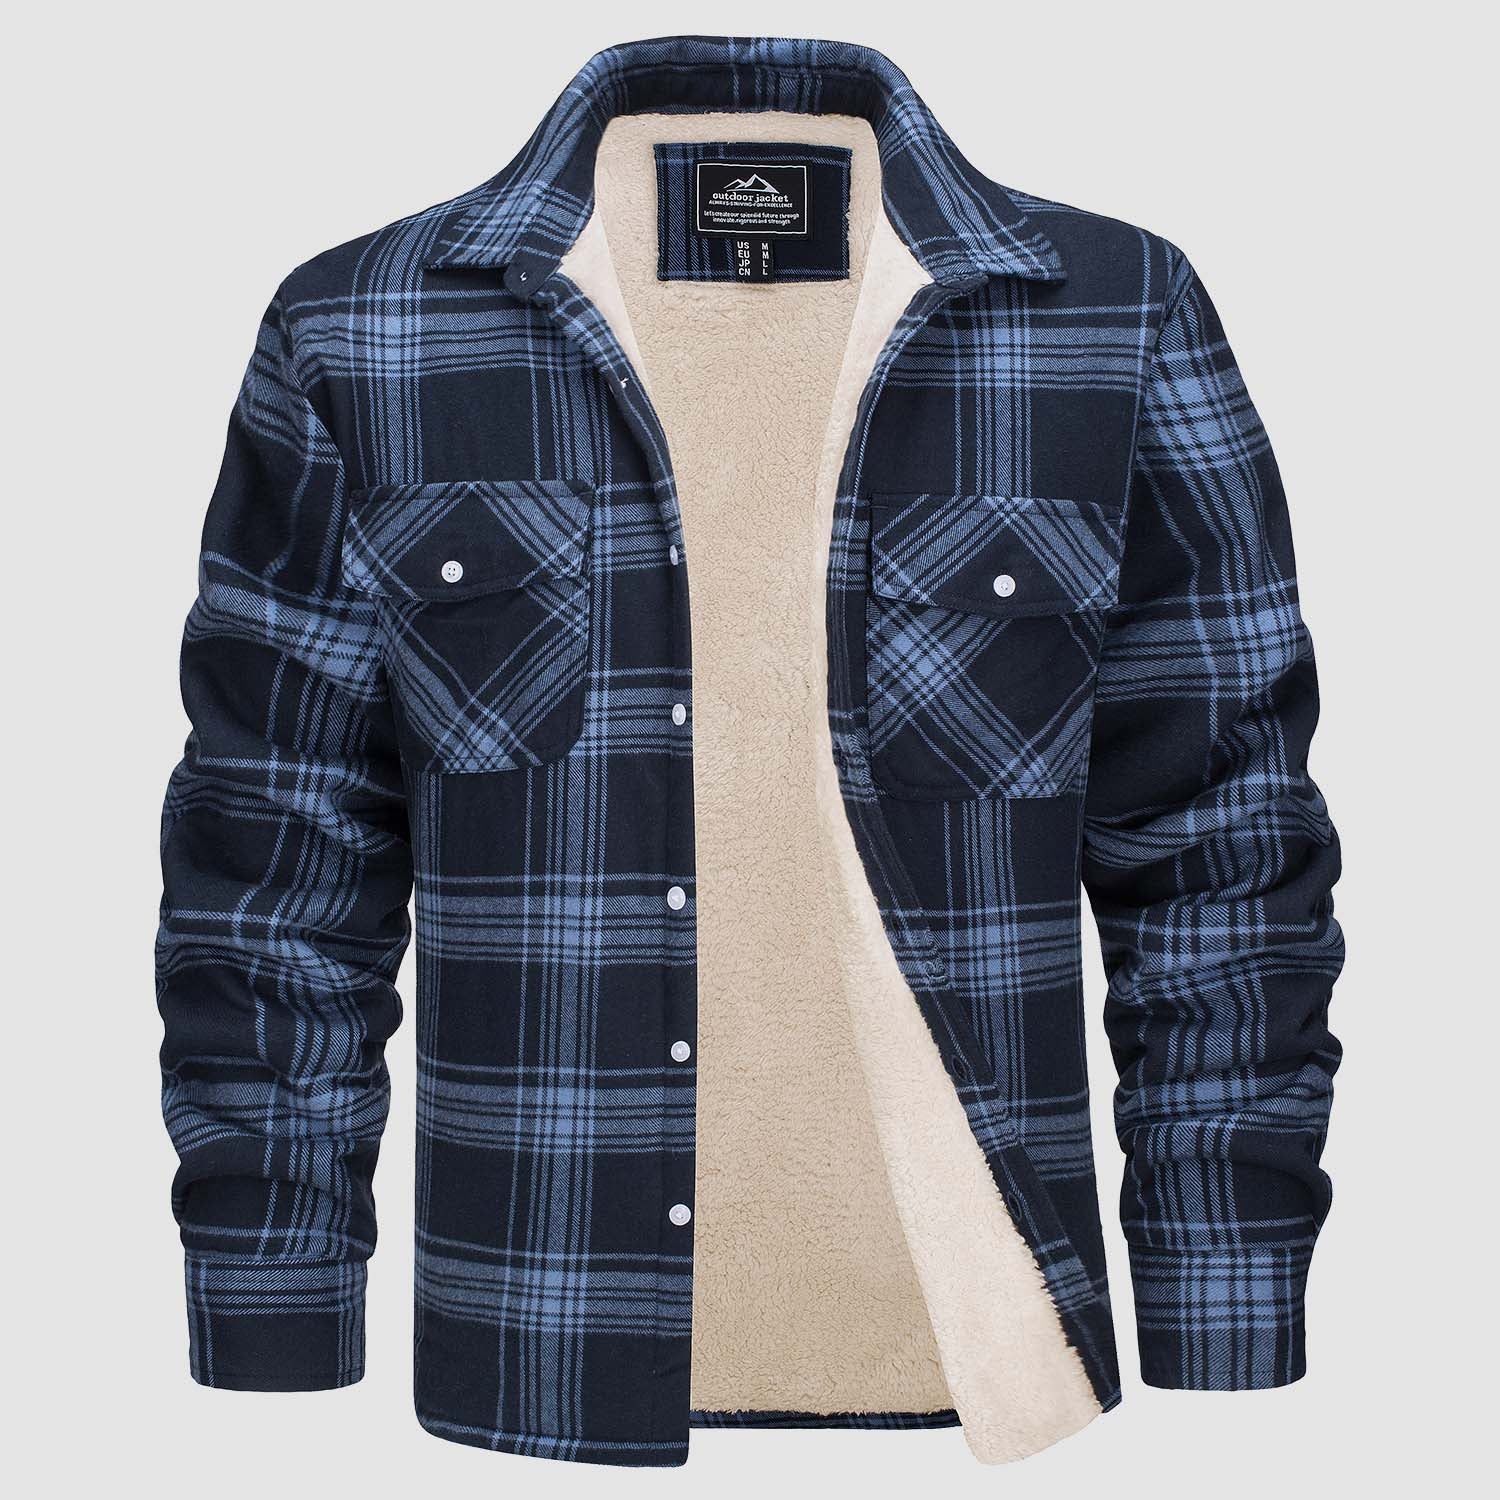 Men's Sherpa Fleece Lined Shirt Casual Plaid Shirt Jacket, Grey Blue / M